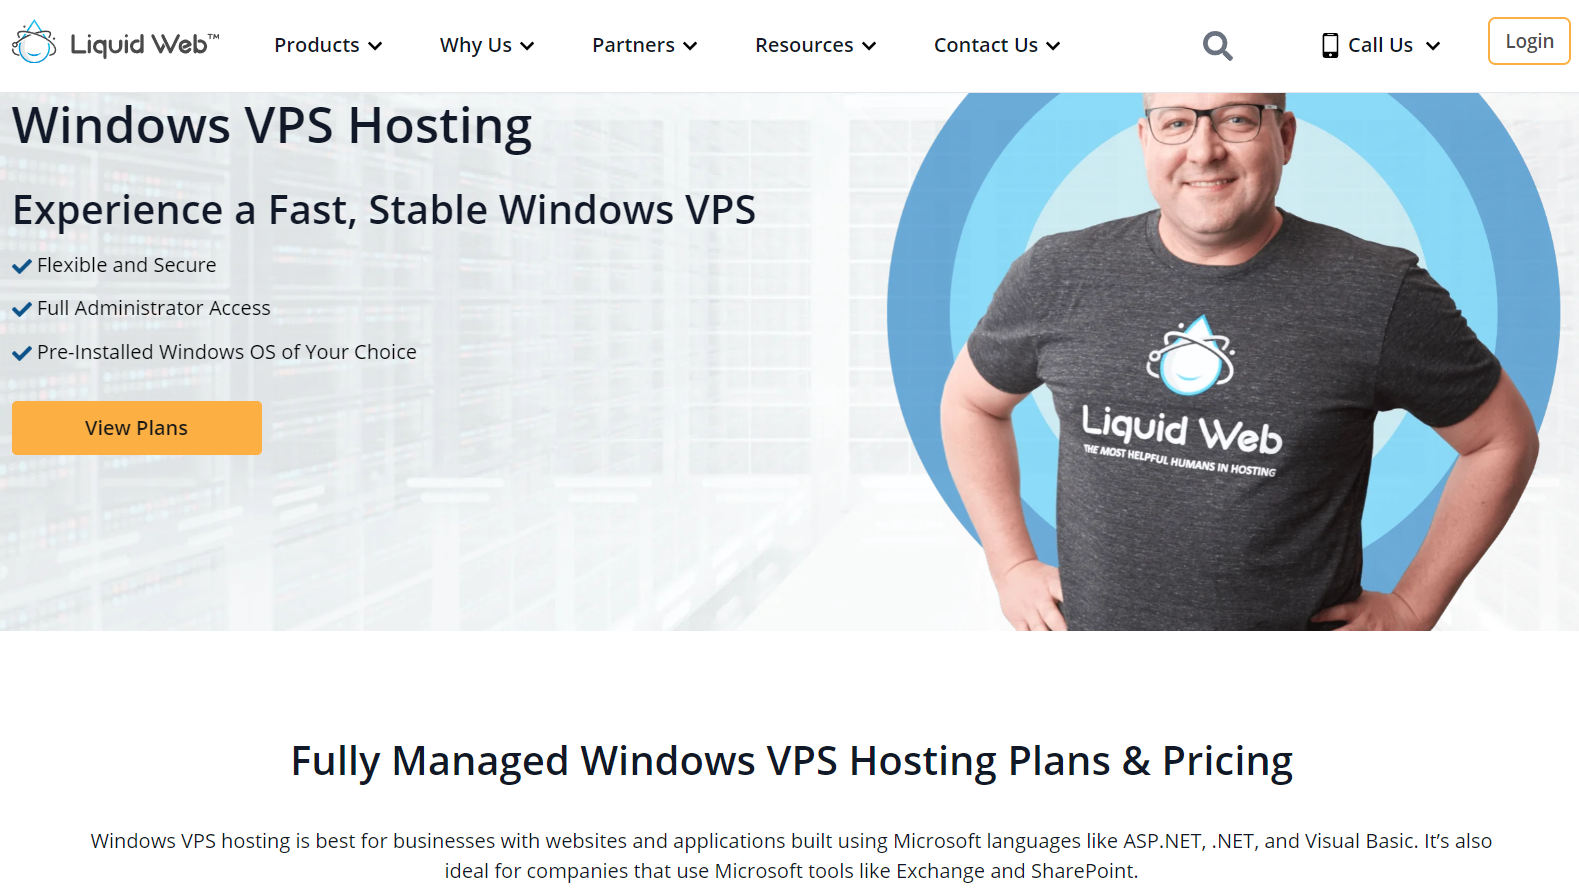 Liquid Web's Windows VPS Hosting page